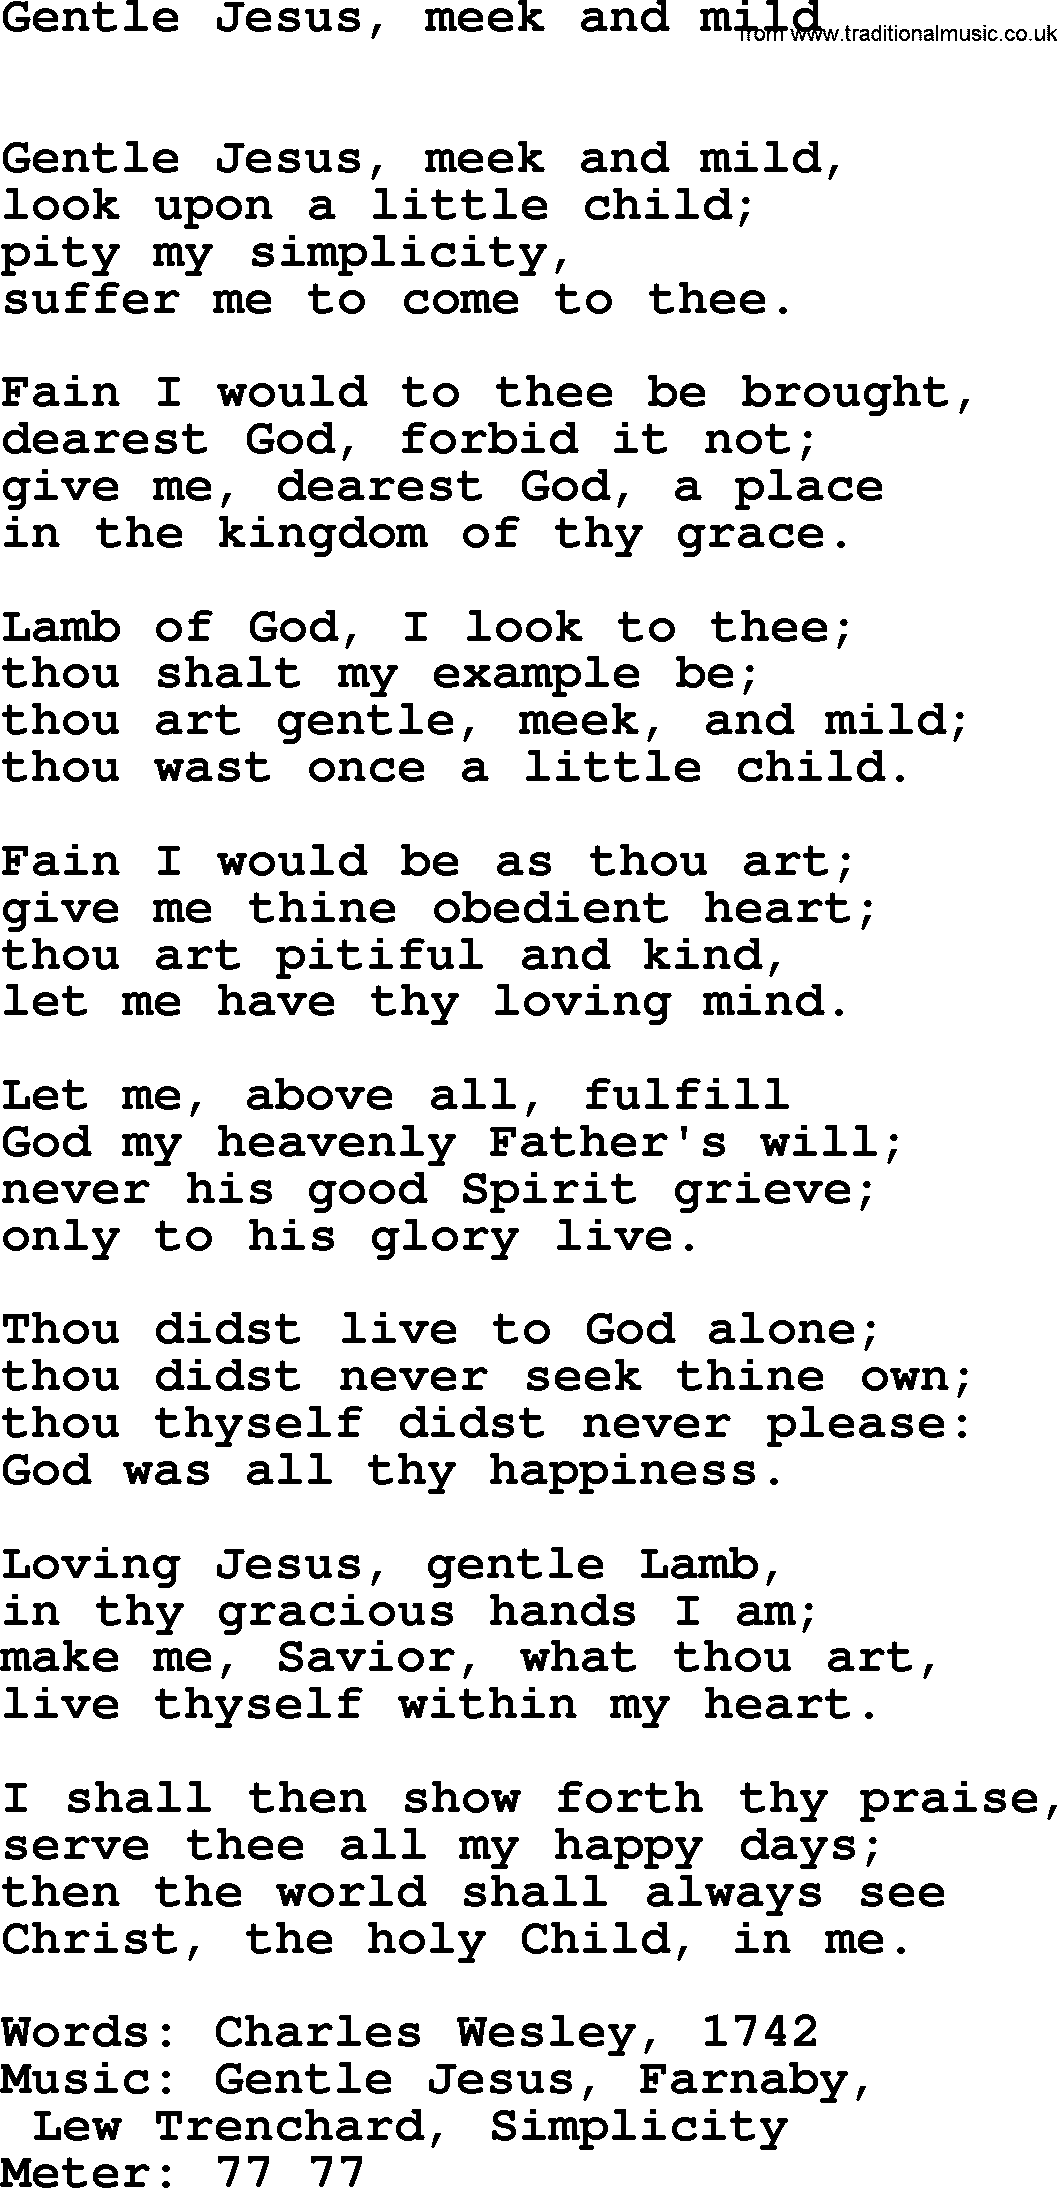 Book of Common Praise Hymn: Gentle Jesus, Meek And Mild.txt lyrics with midi music